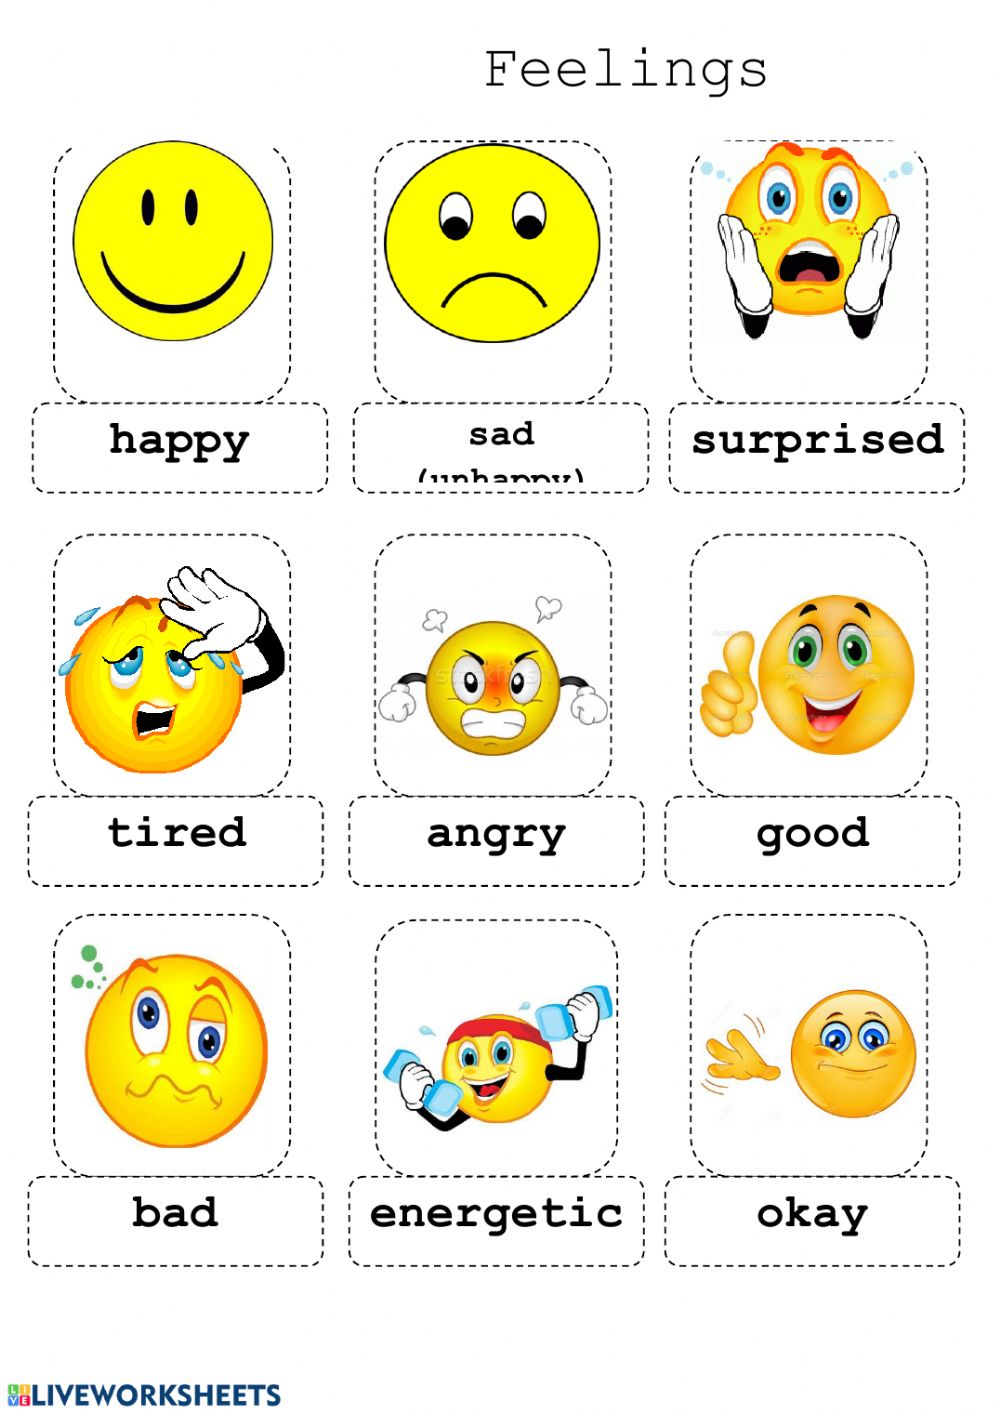 Feelings vocabulary. Emotions на английском. Все эмоции на английском. Положительные эмоции на английском.